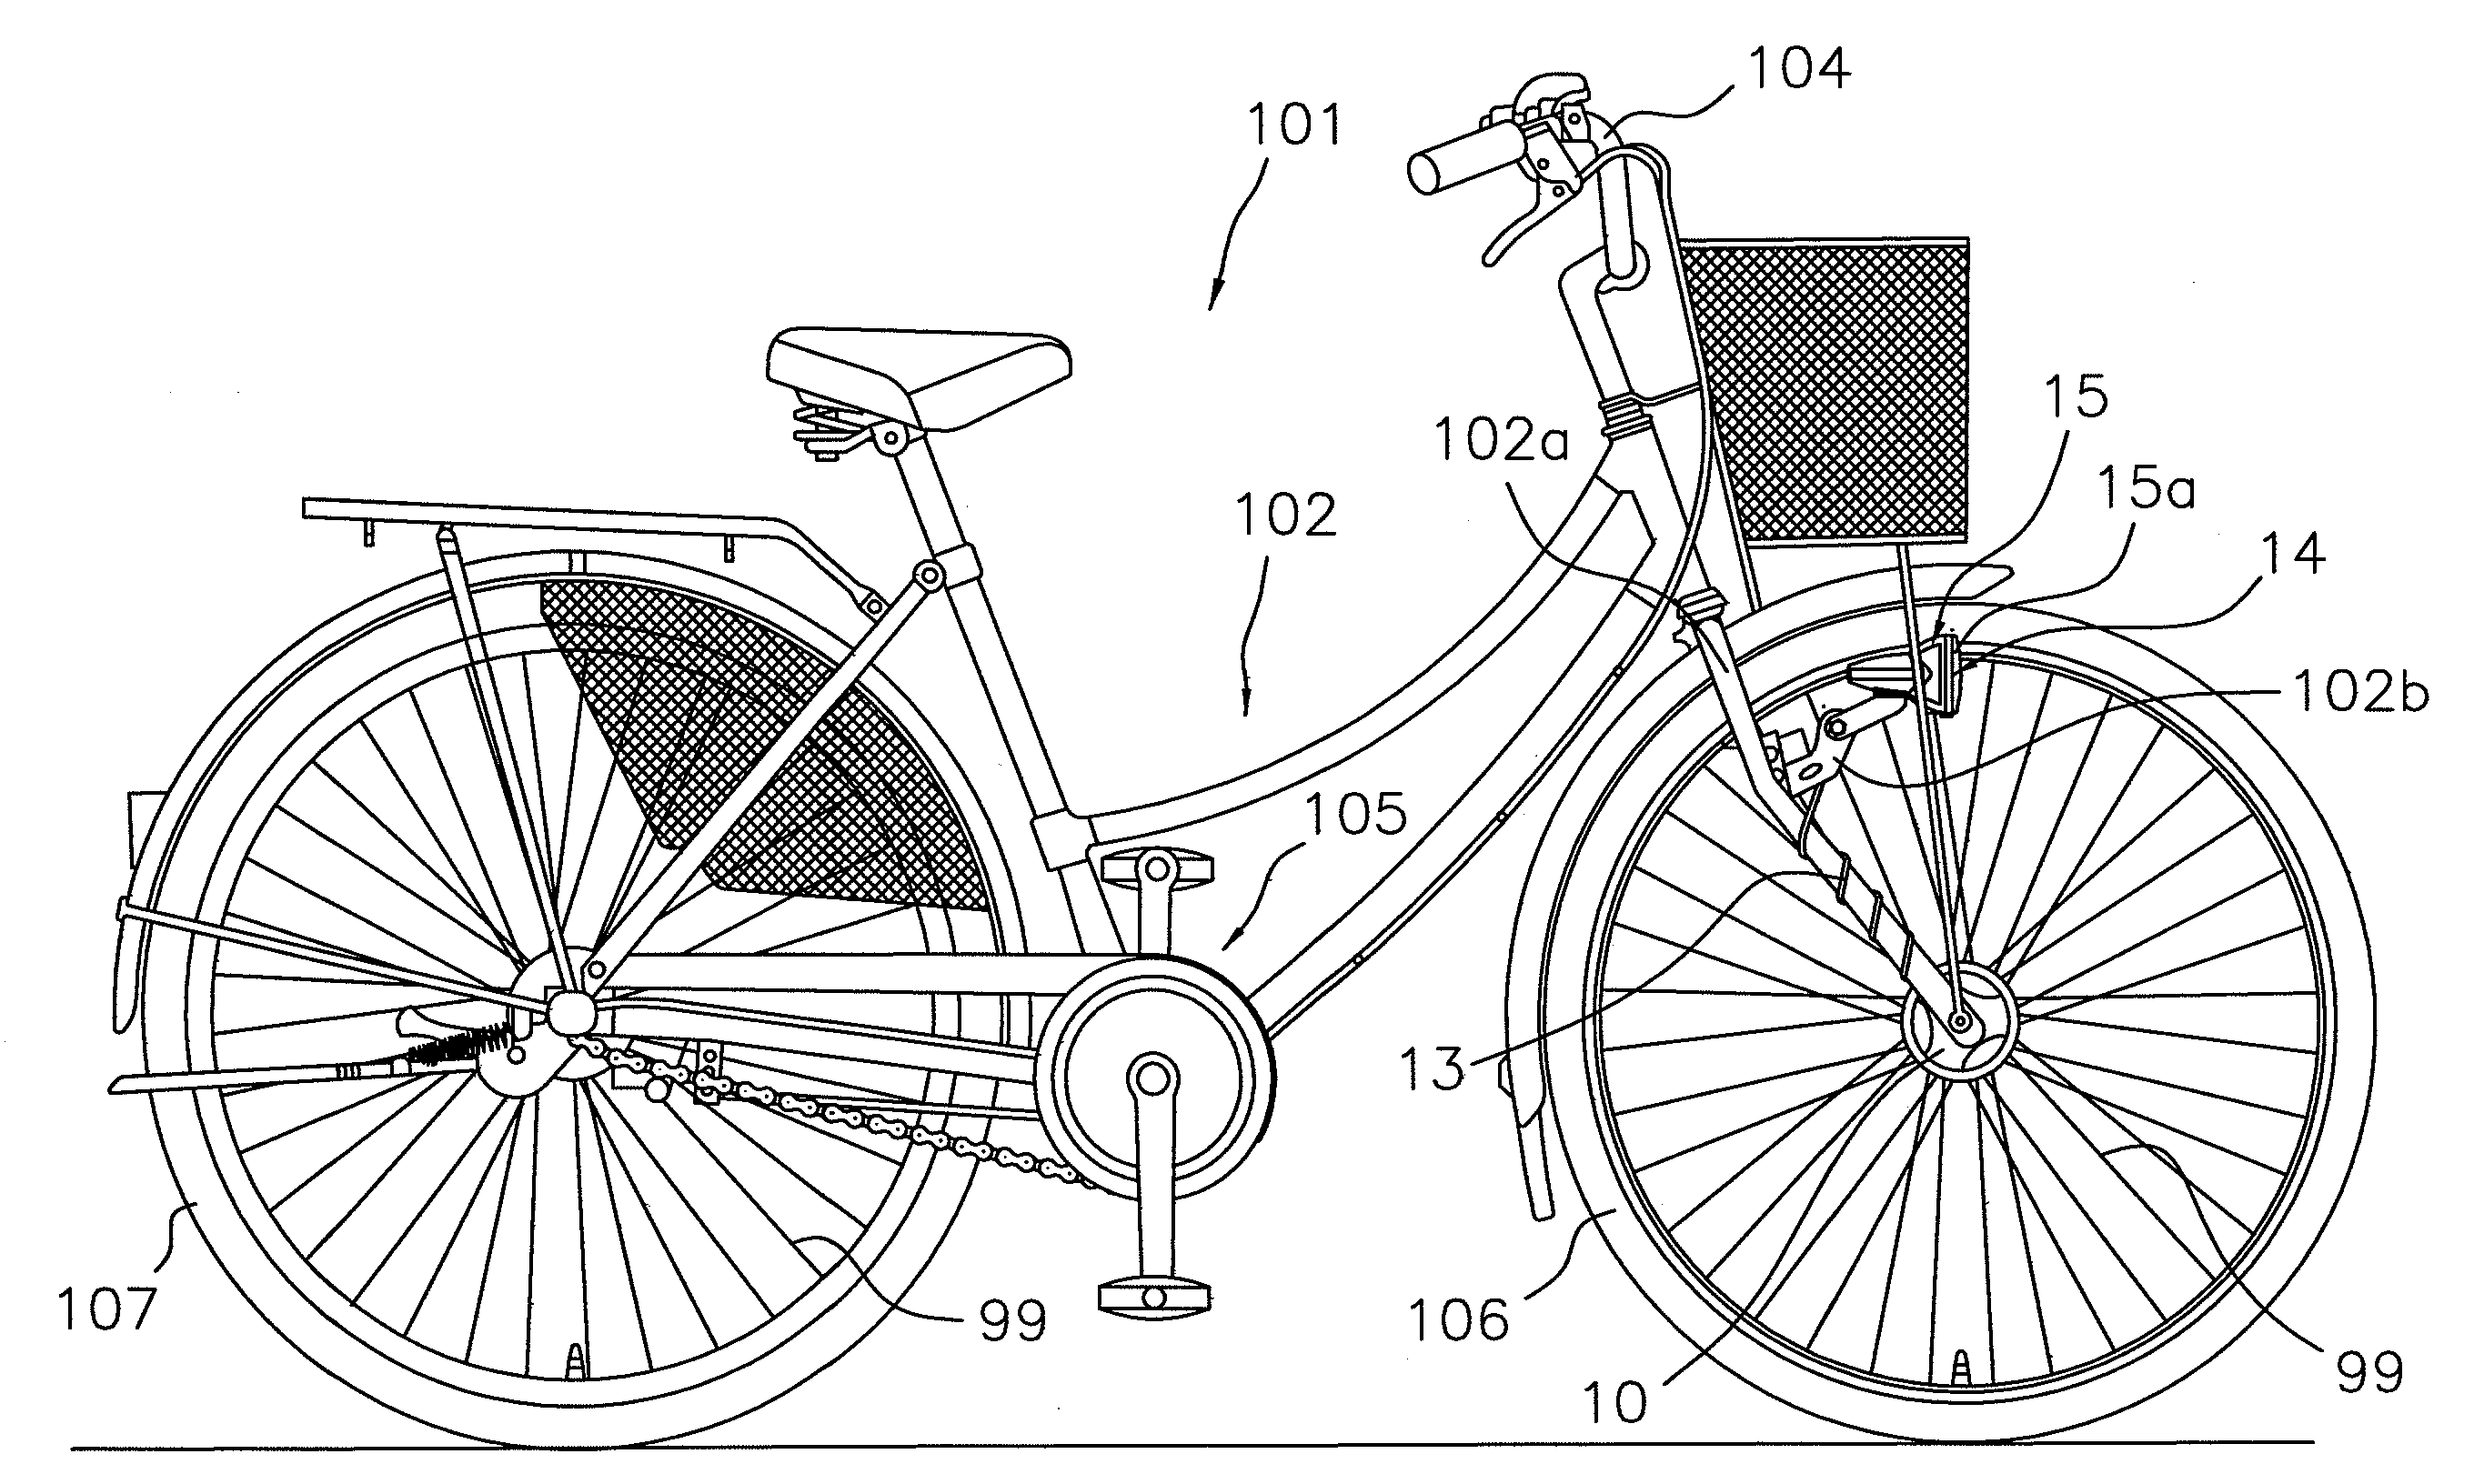 Bicycle illumination apparatus